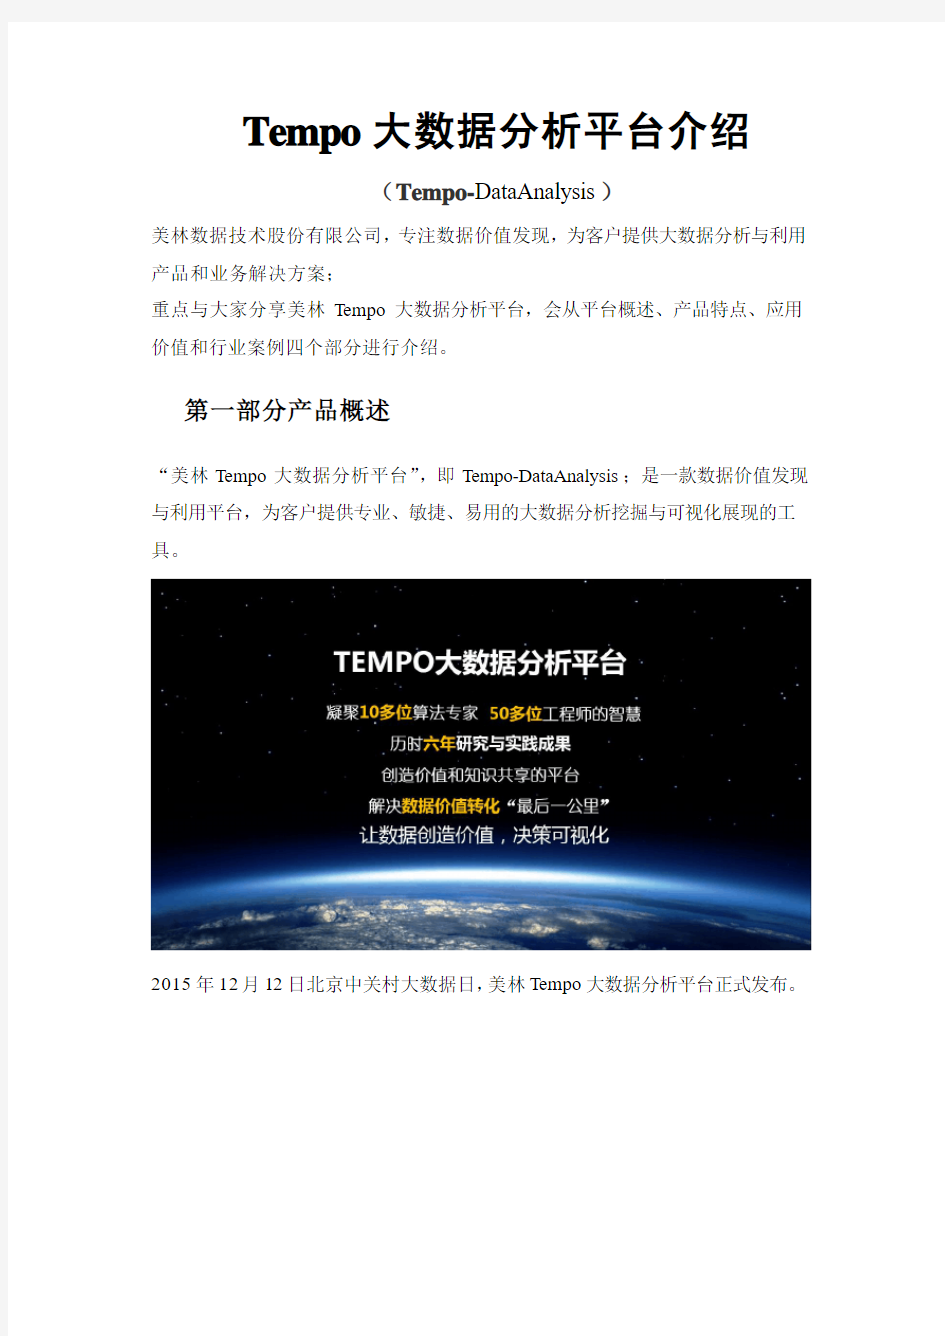 Tempo大数据分析平台介绍